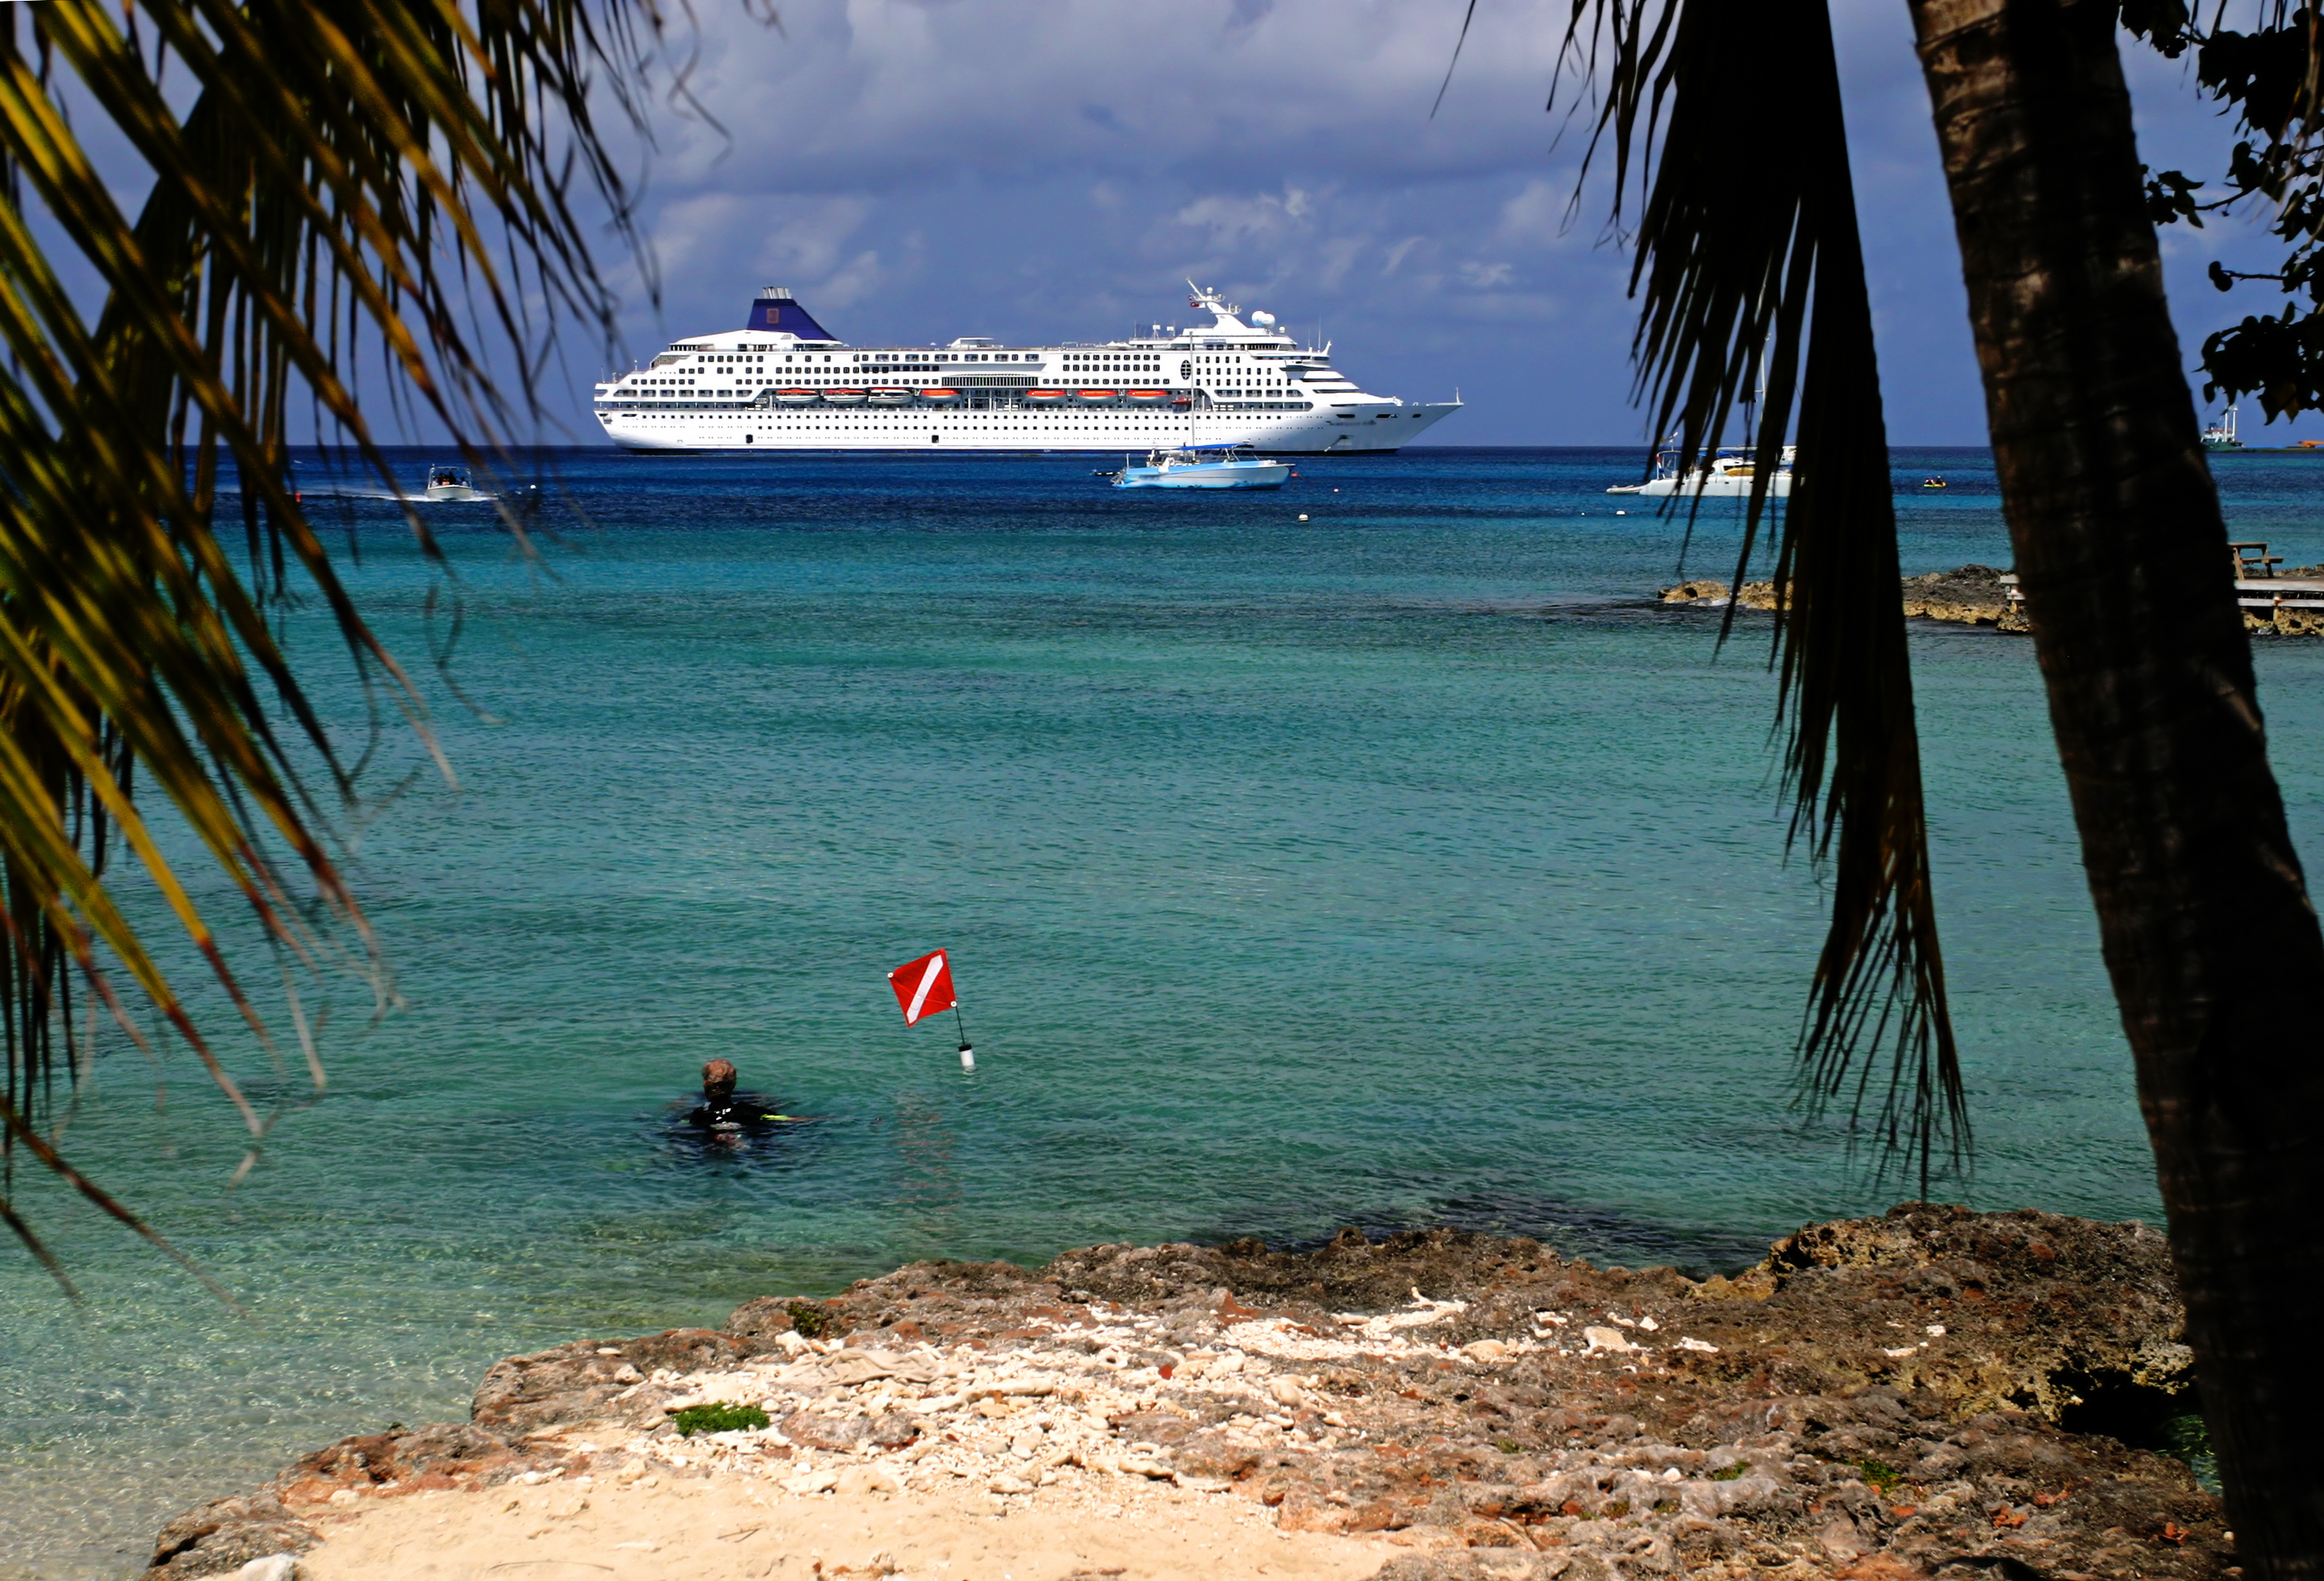 Several divers on a Caribbean cruise ship enjoy a shore diving excursion